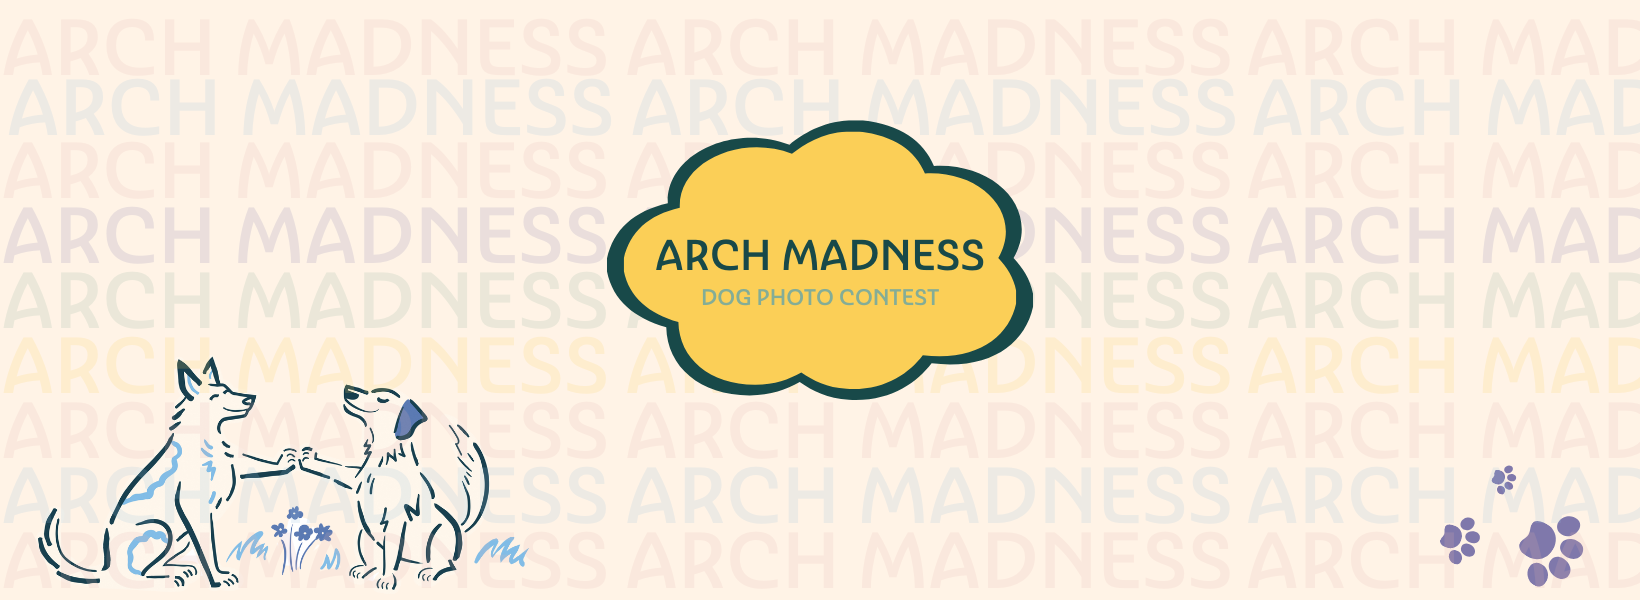 Arch Madness